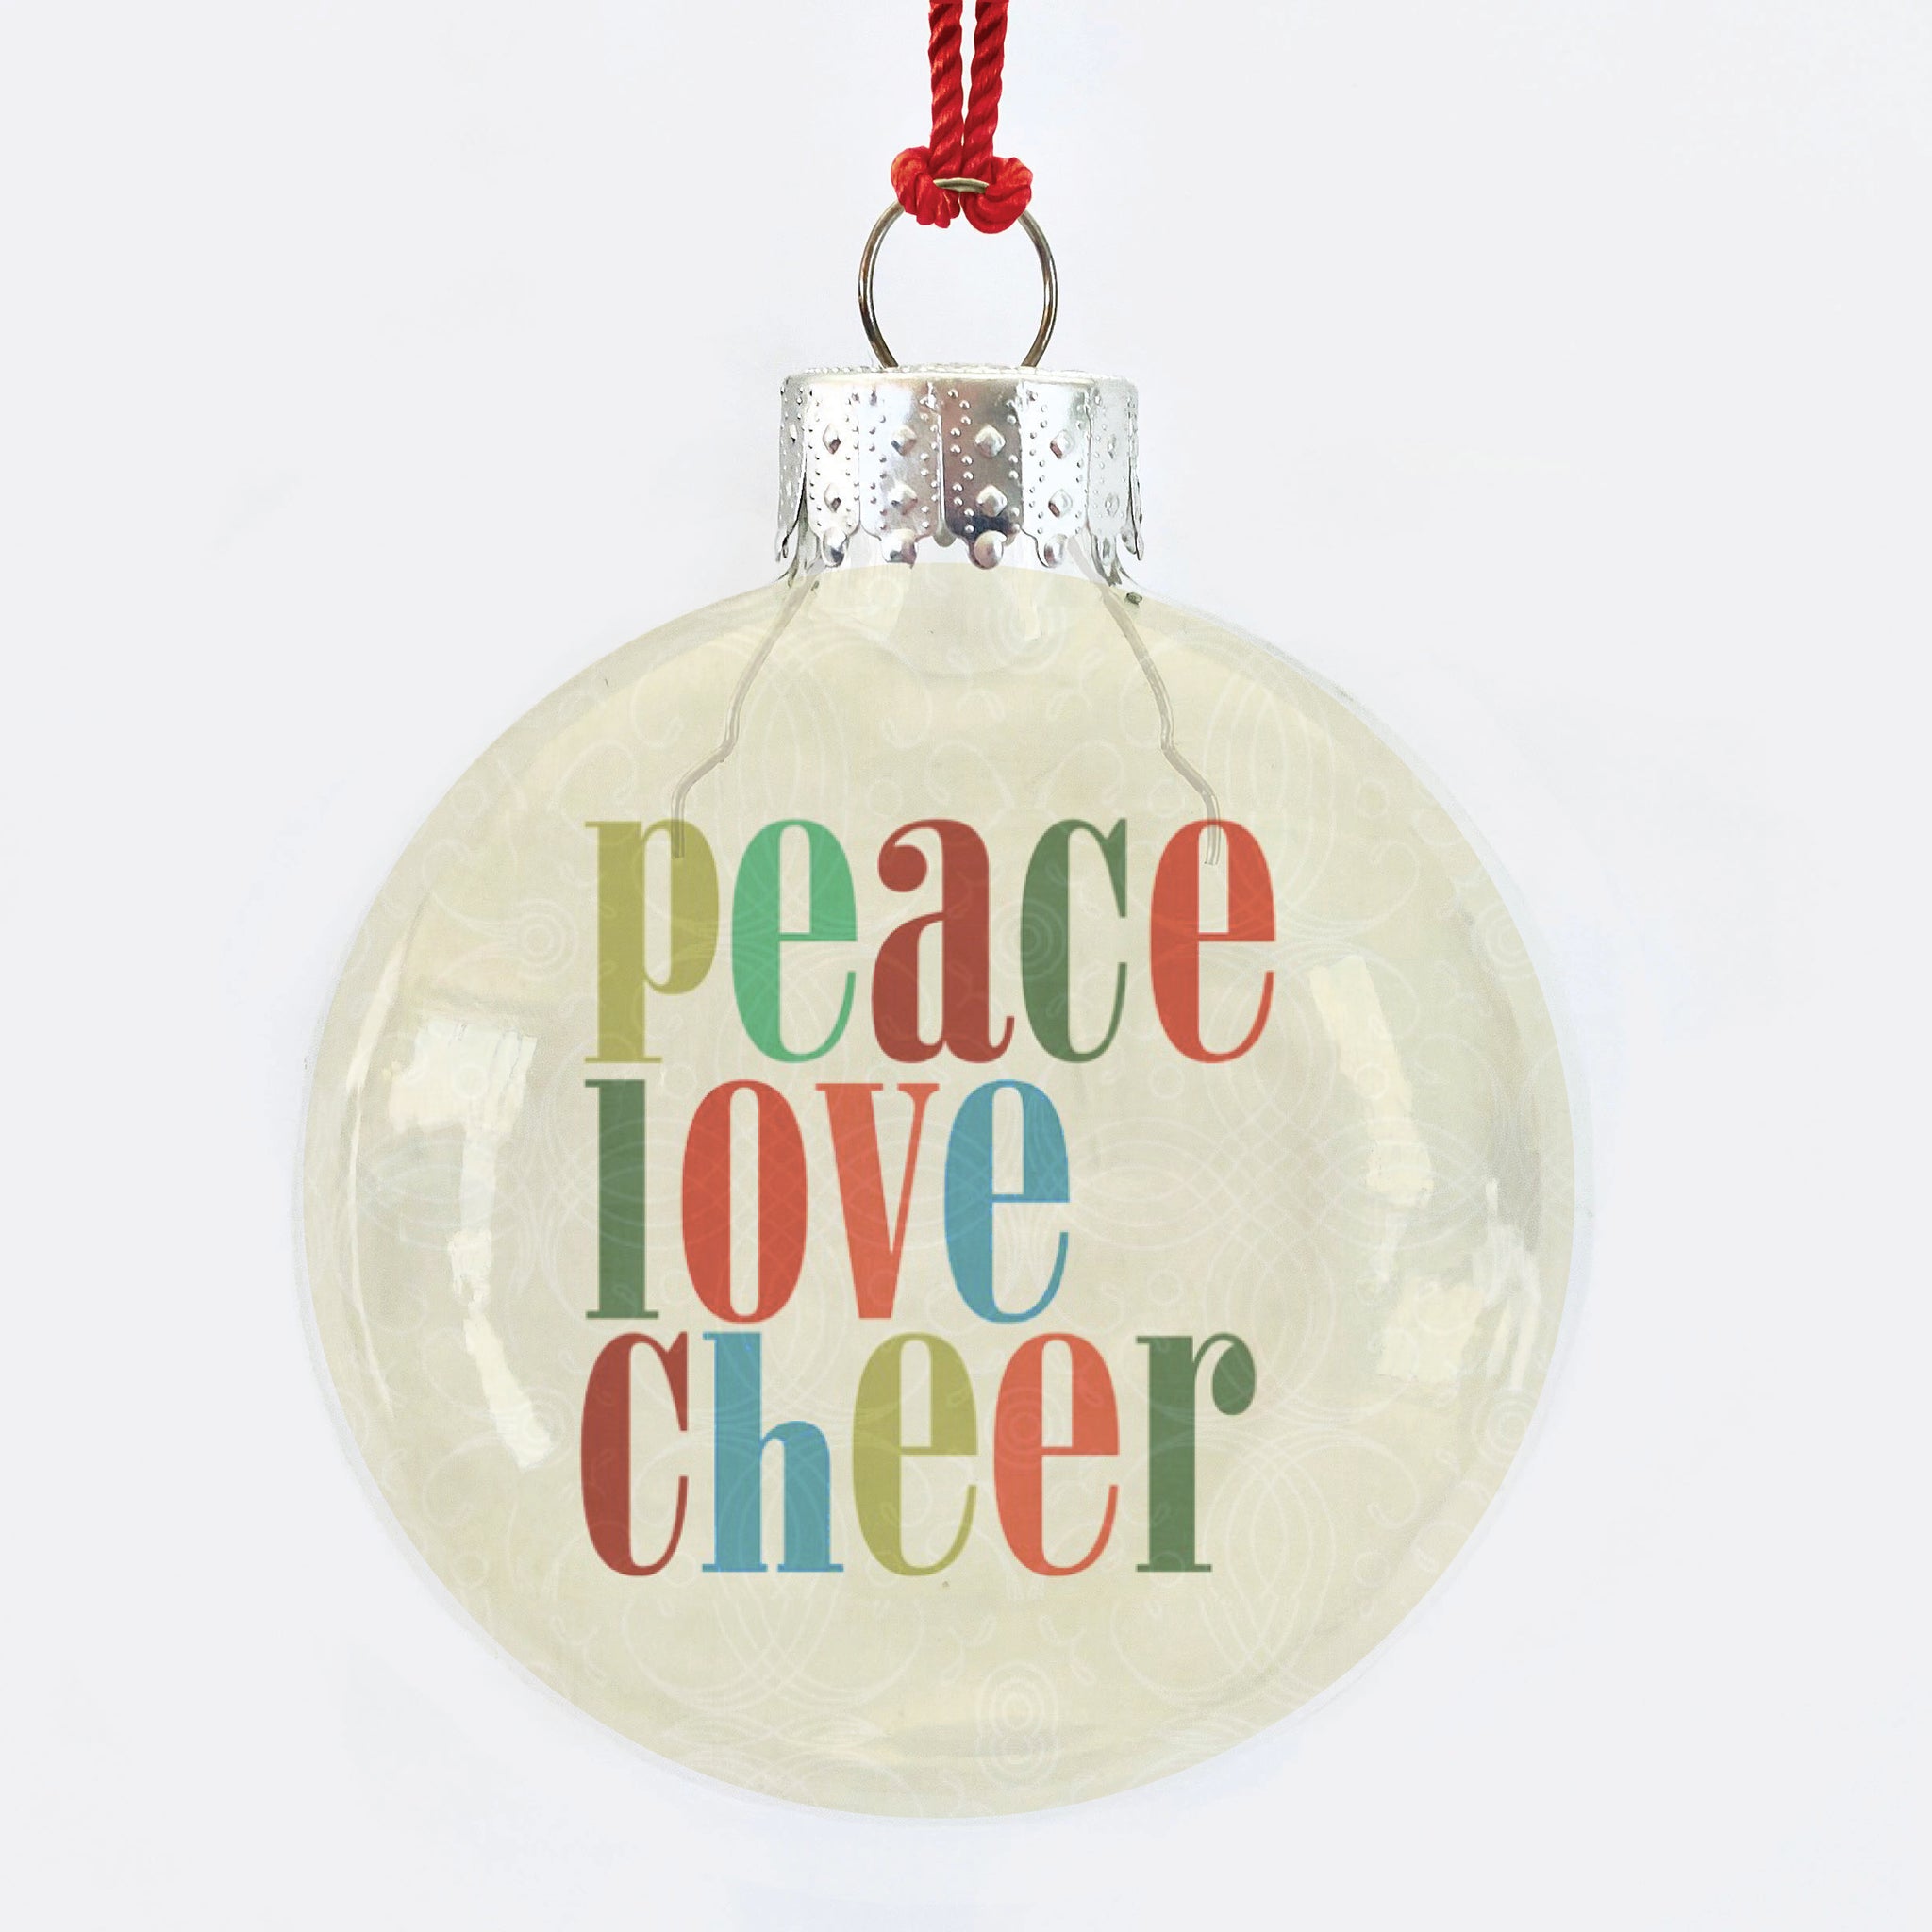 peace love cheer